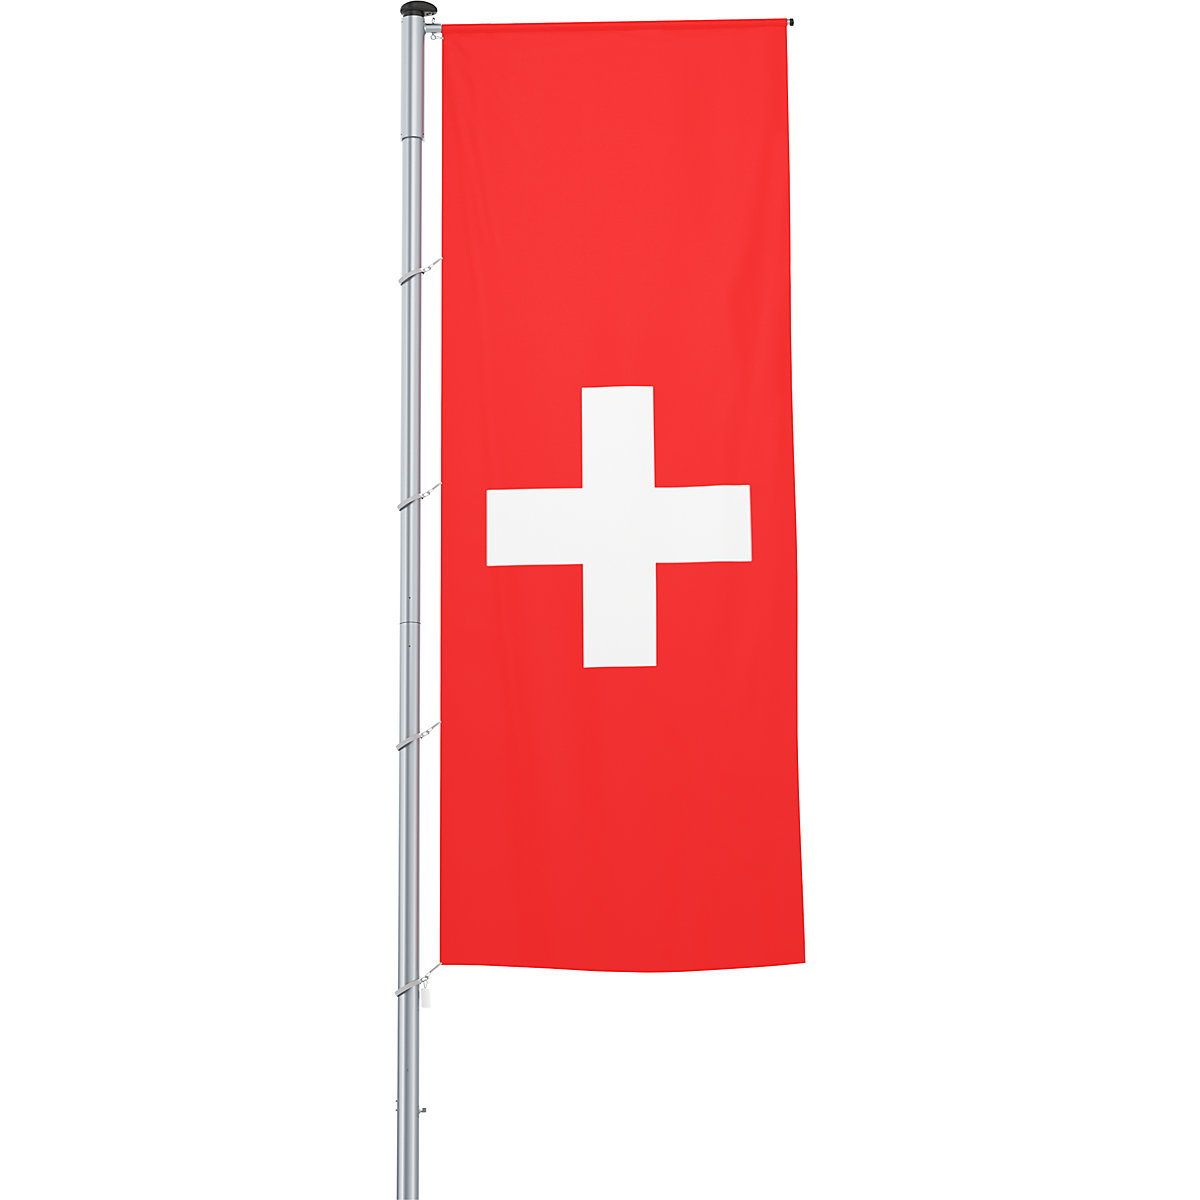 Steag pentru braț/drapel național – Mannus, format 1,2 x 3 m, Elveția-16